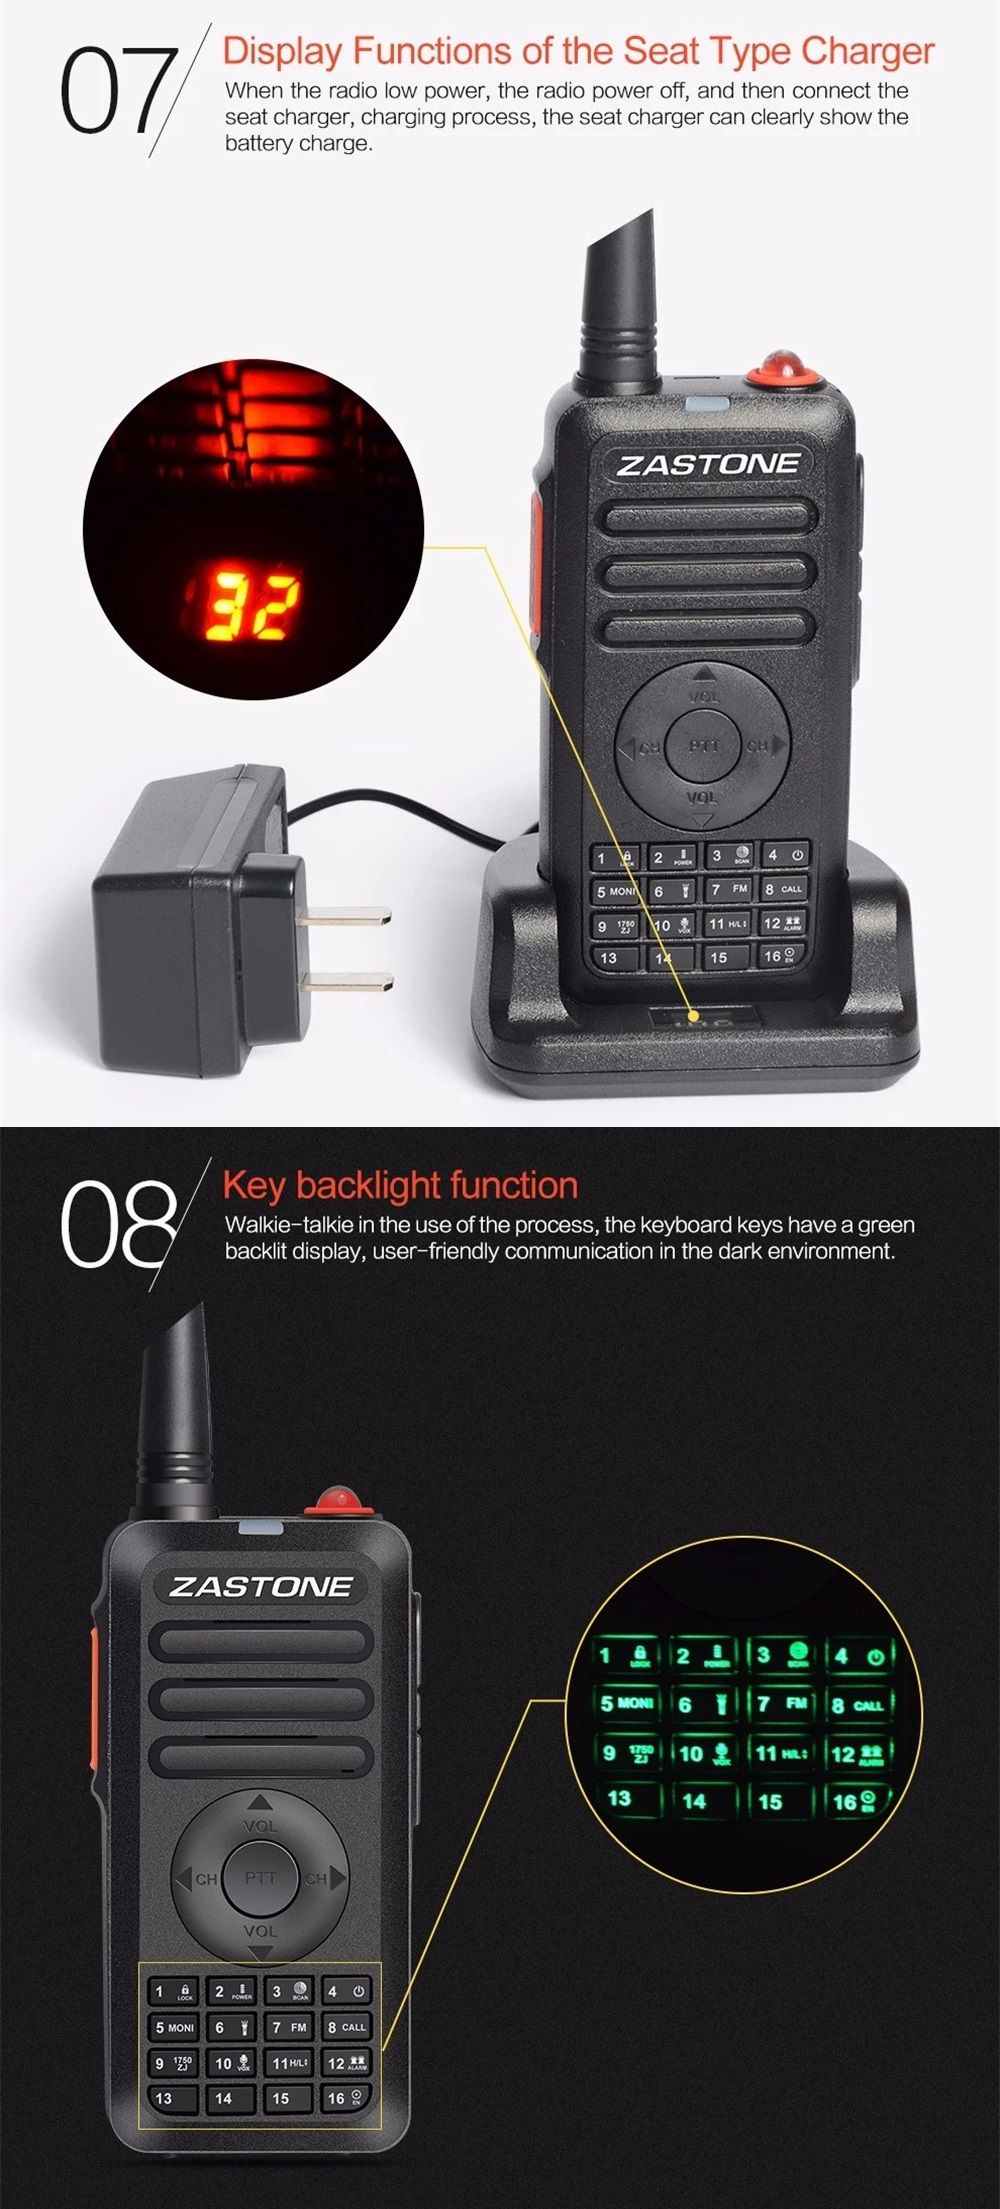 Zastone-X68-Walkie-Talkie-UHF-400-470Mhz-Handheld-Radio-Communicator-Two-Way-Radio-Communication-Ham-1385373